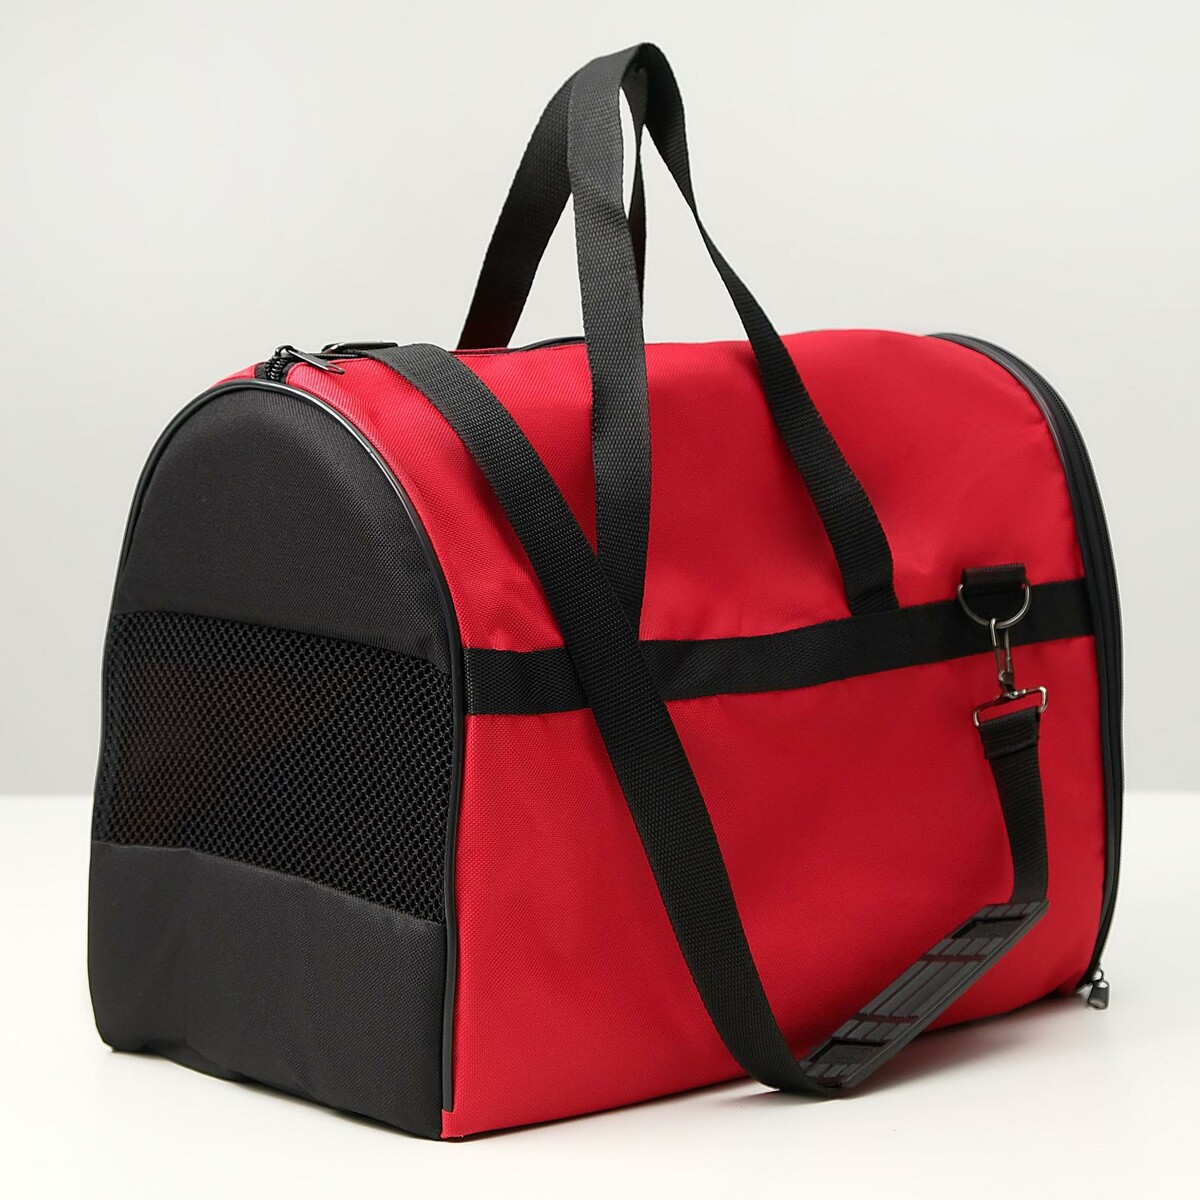 Сумка - переноска для животных сумка переноска для животных на плечо пвх 37 х 13 х 20 см красная